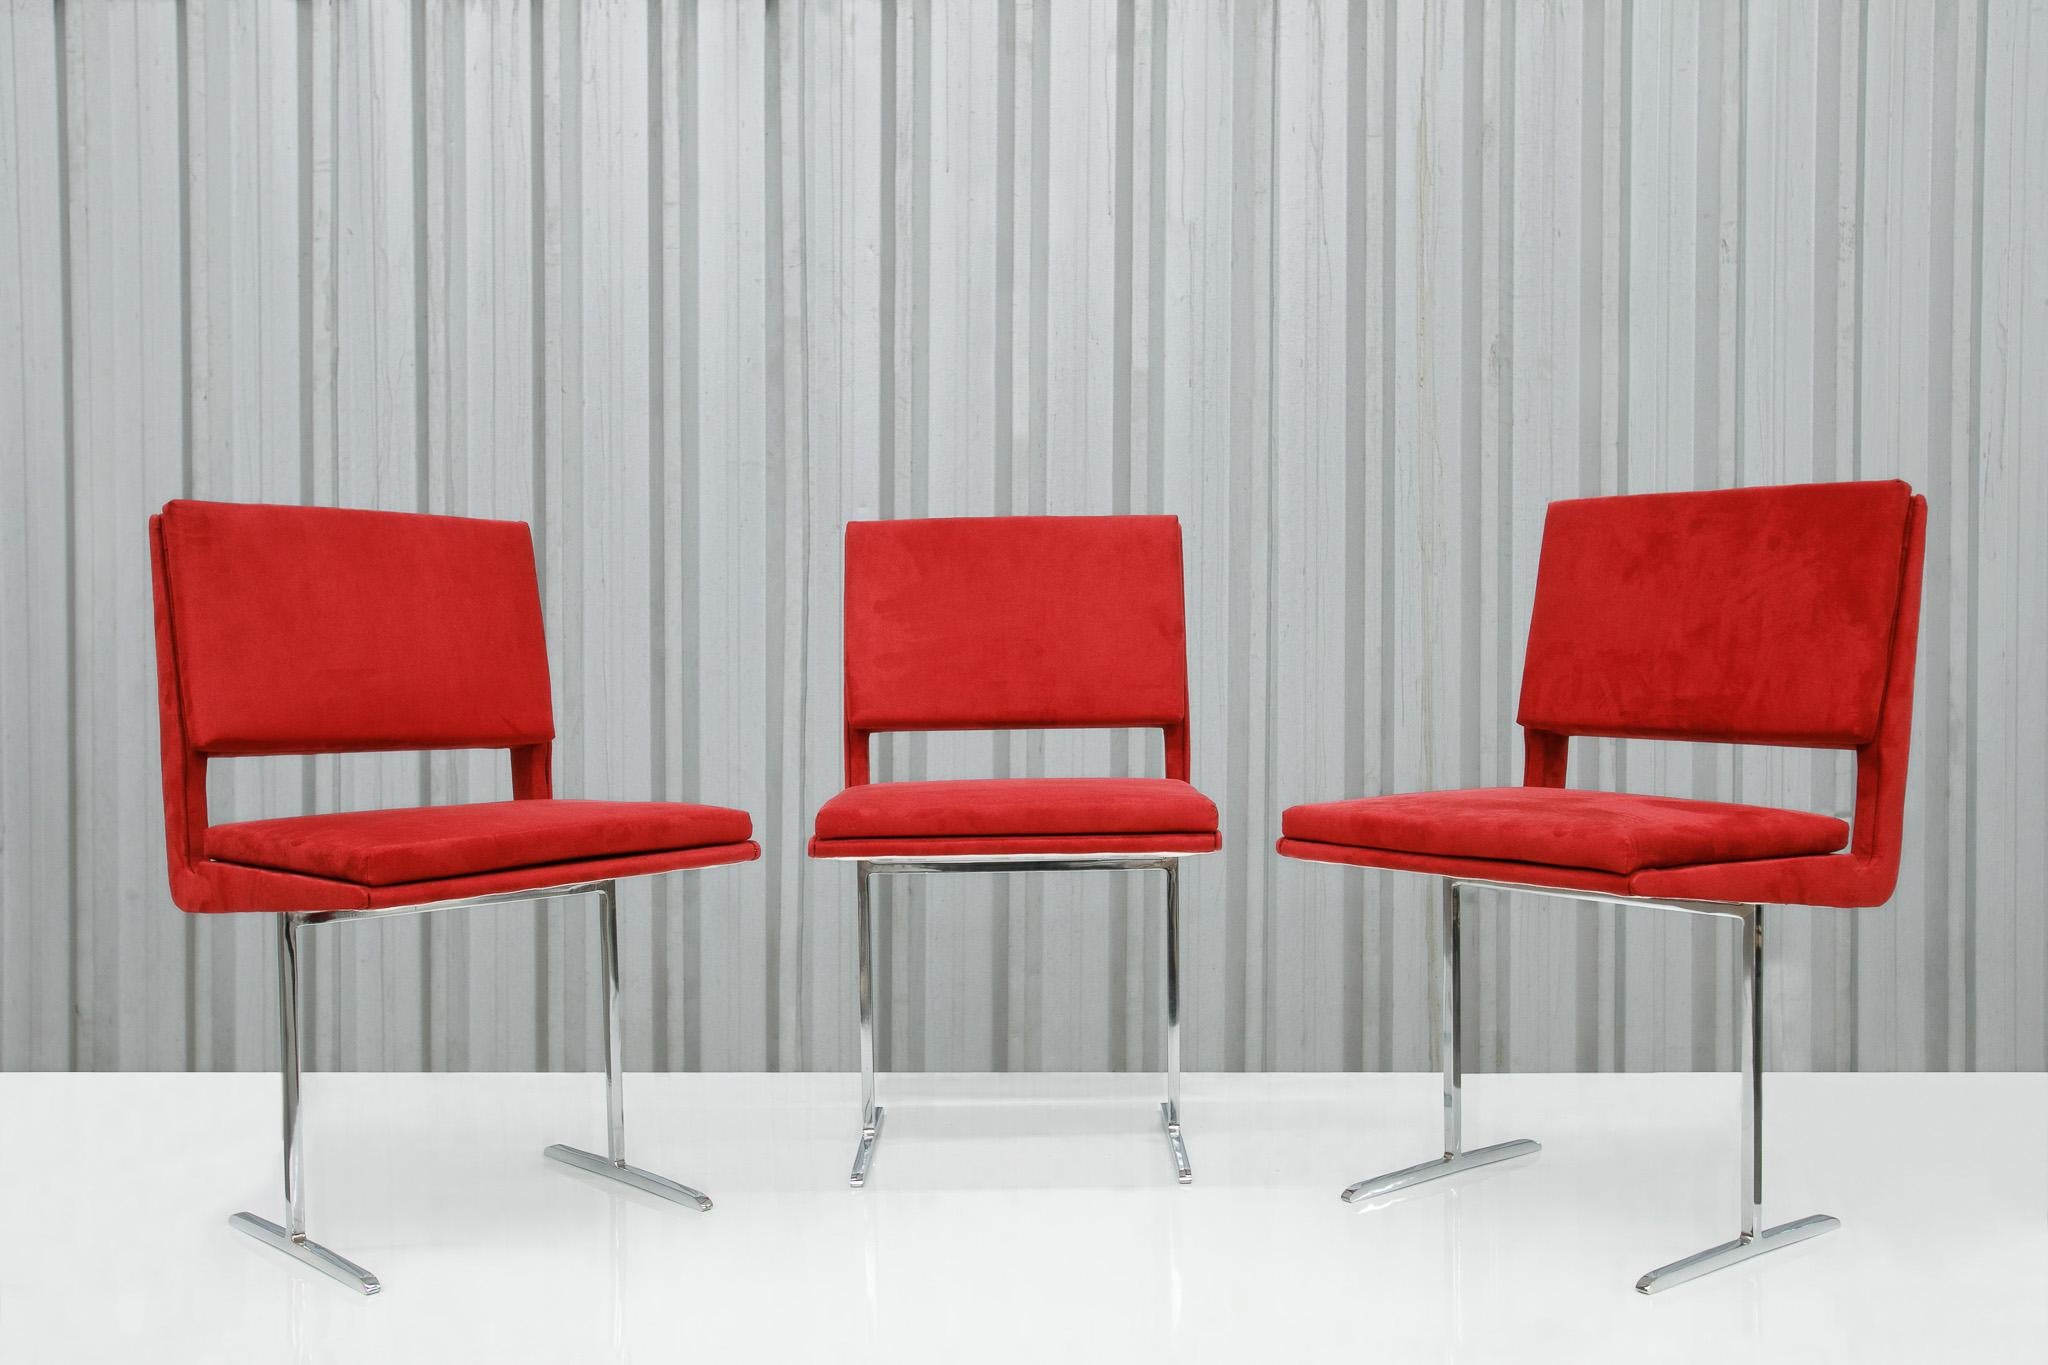 Metalwork Brazilian Modern Chairs in Chrome & Red Velvet by Jorge Zalszupin, 1965 Brazil For Sale